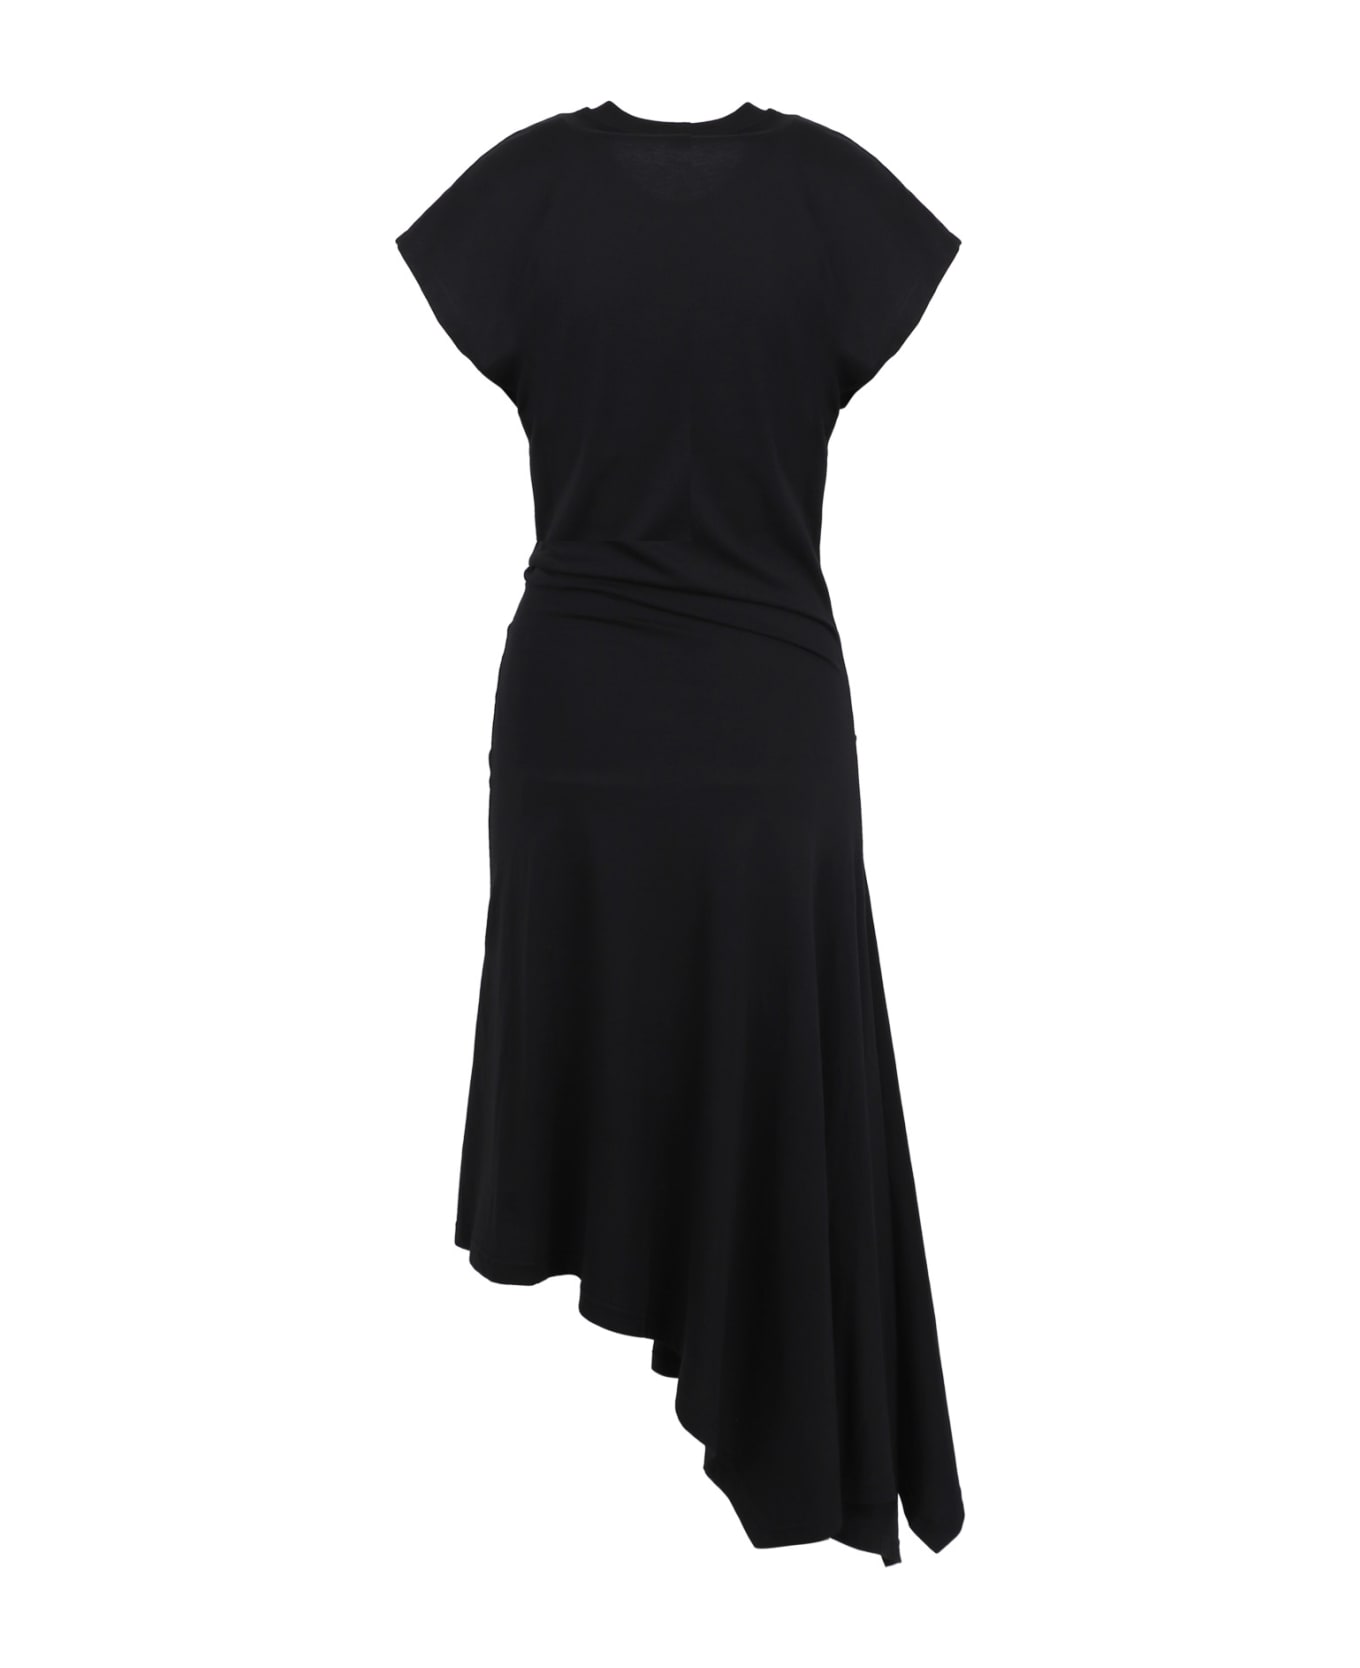 Nina Ricci Asymmetric Midi Cotton Dress - Black